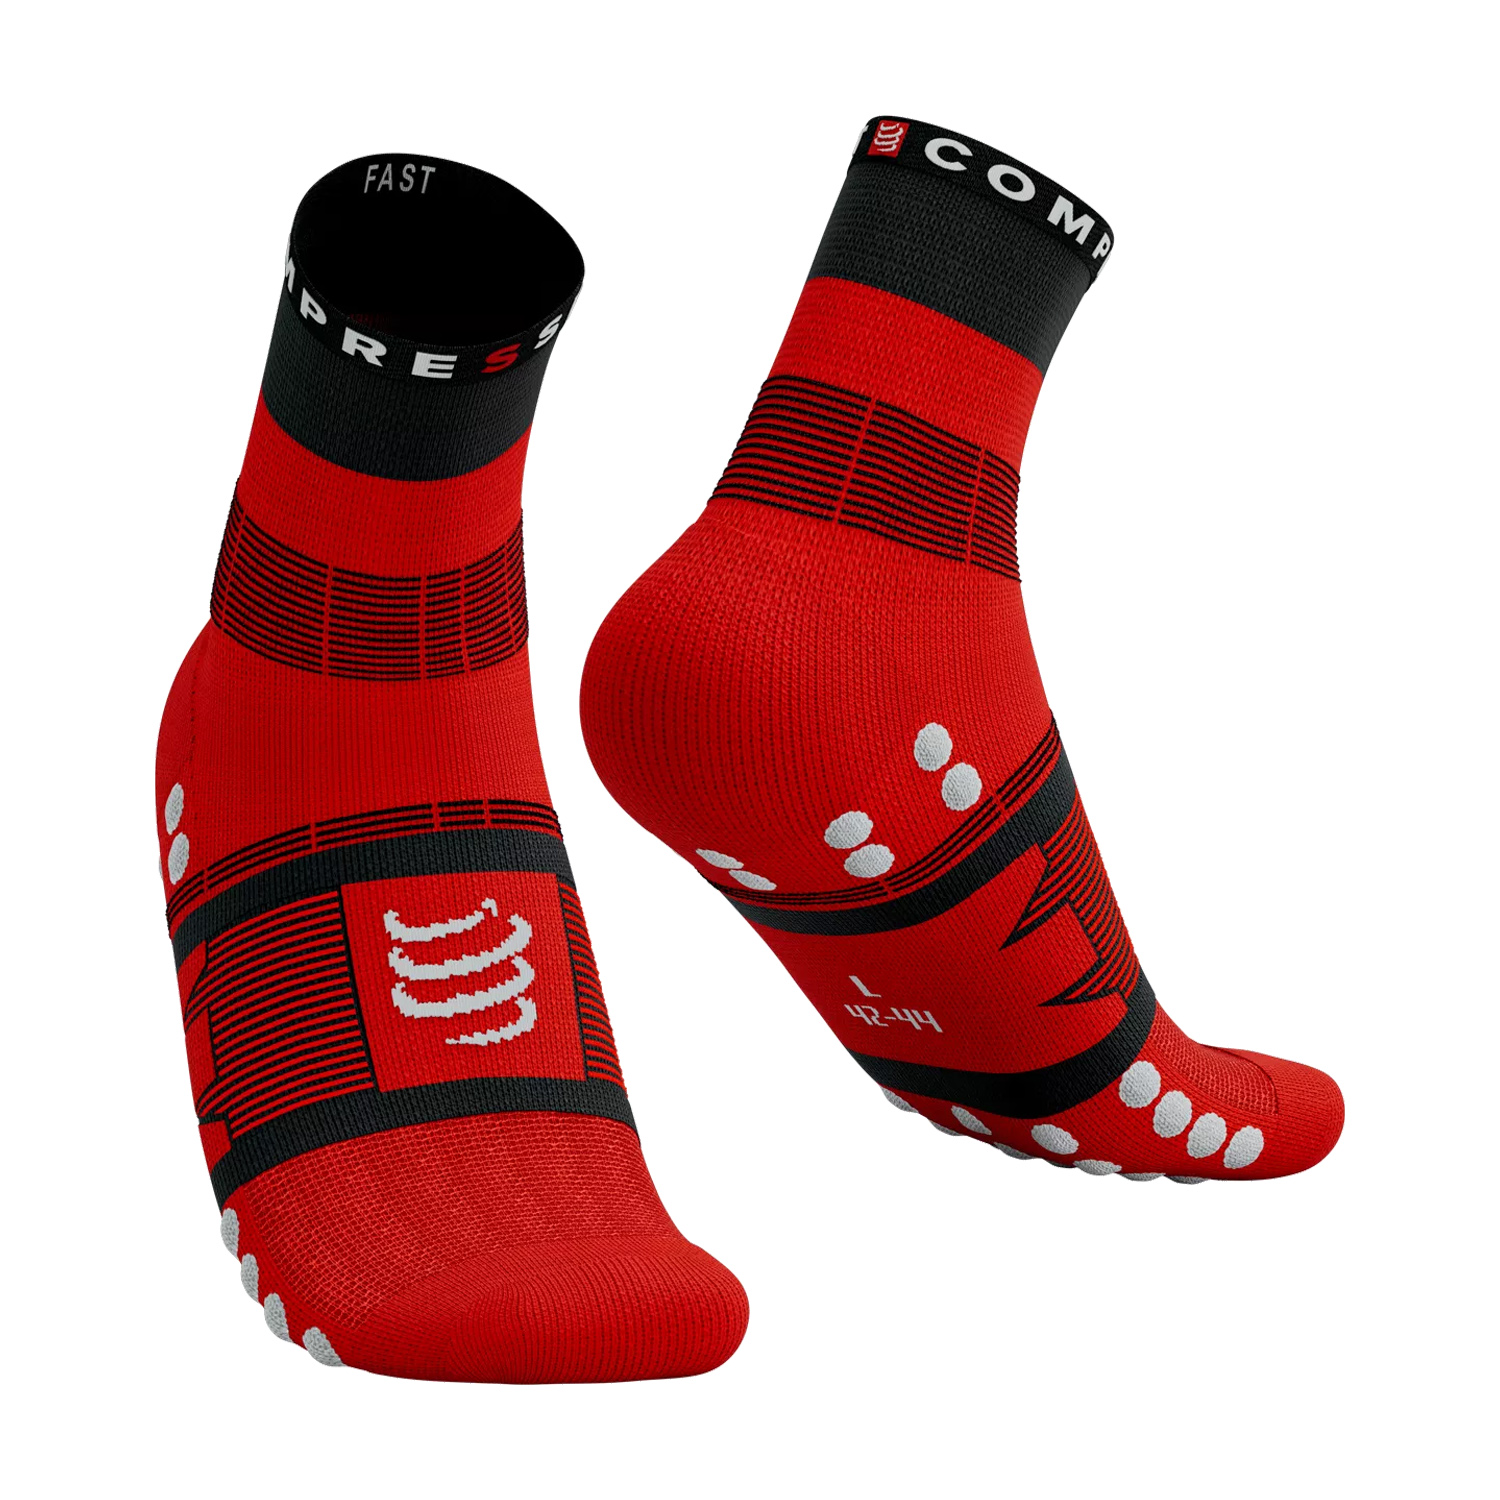 Compressport Fast Hiking Socks - Black/Red/White